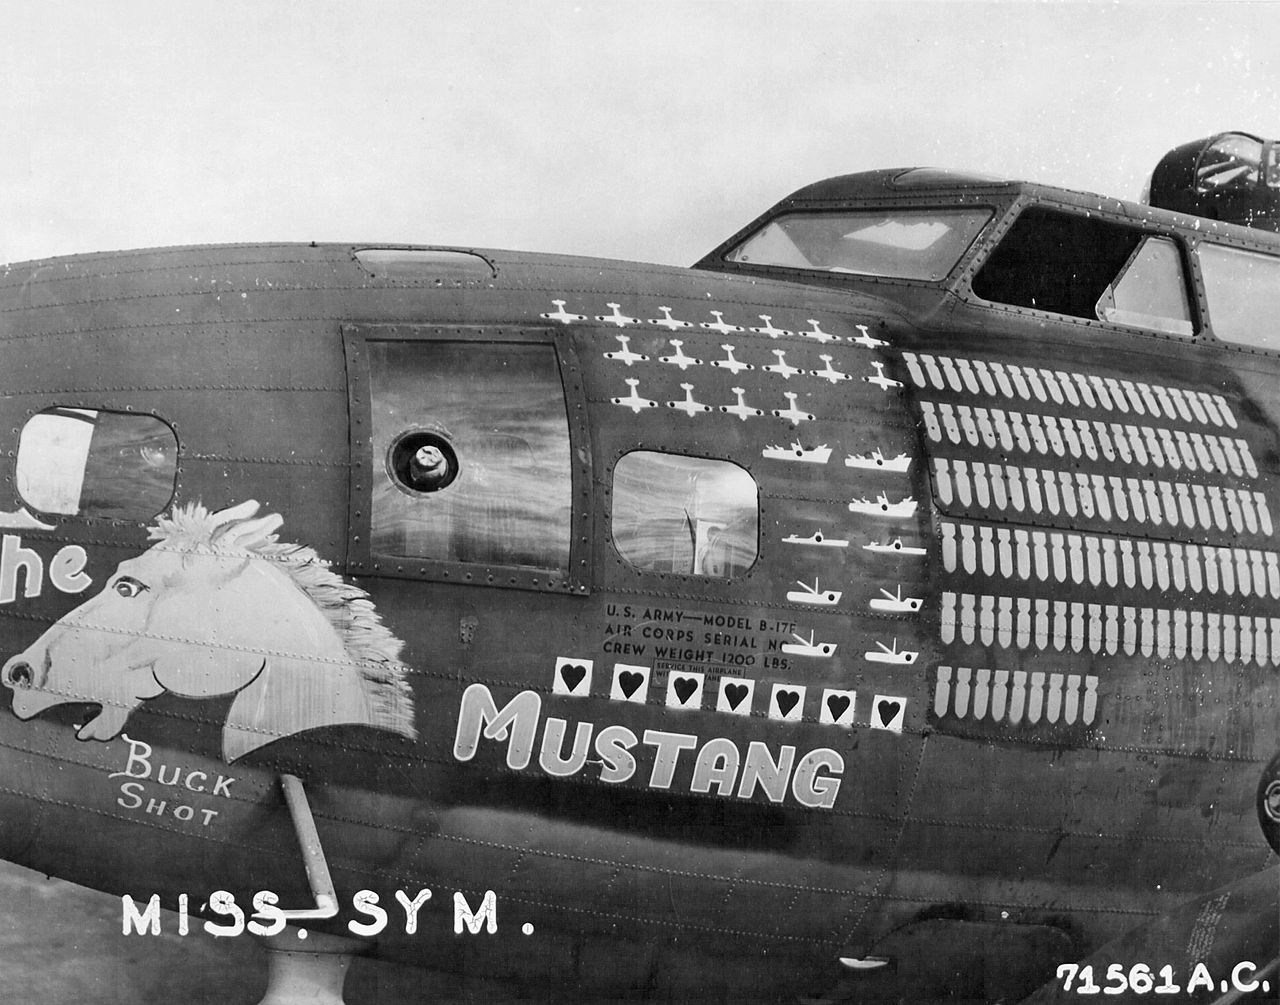 B-17 #41-24554 / Lady Luck aka The Mustang